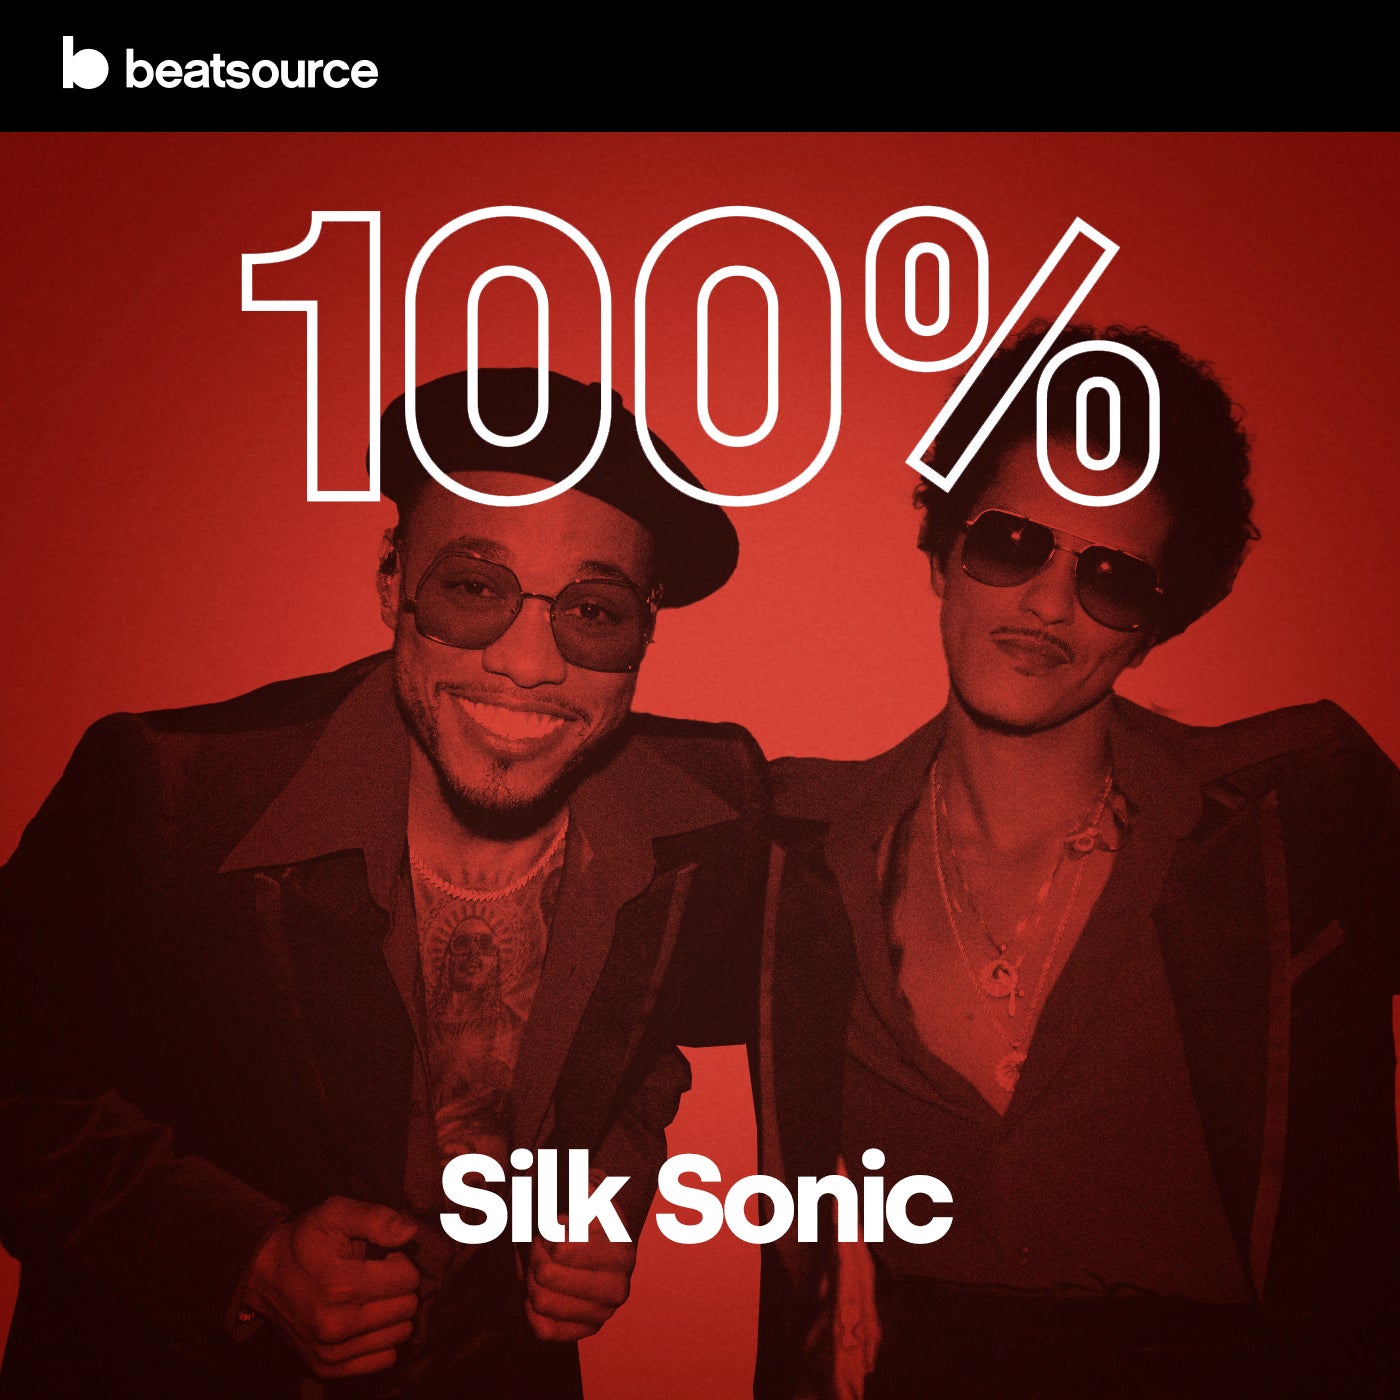 Bruno Mars, Anderson.Paak, Silk Sonic - Silk Sonic Intro [Official Audio] 